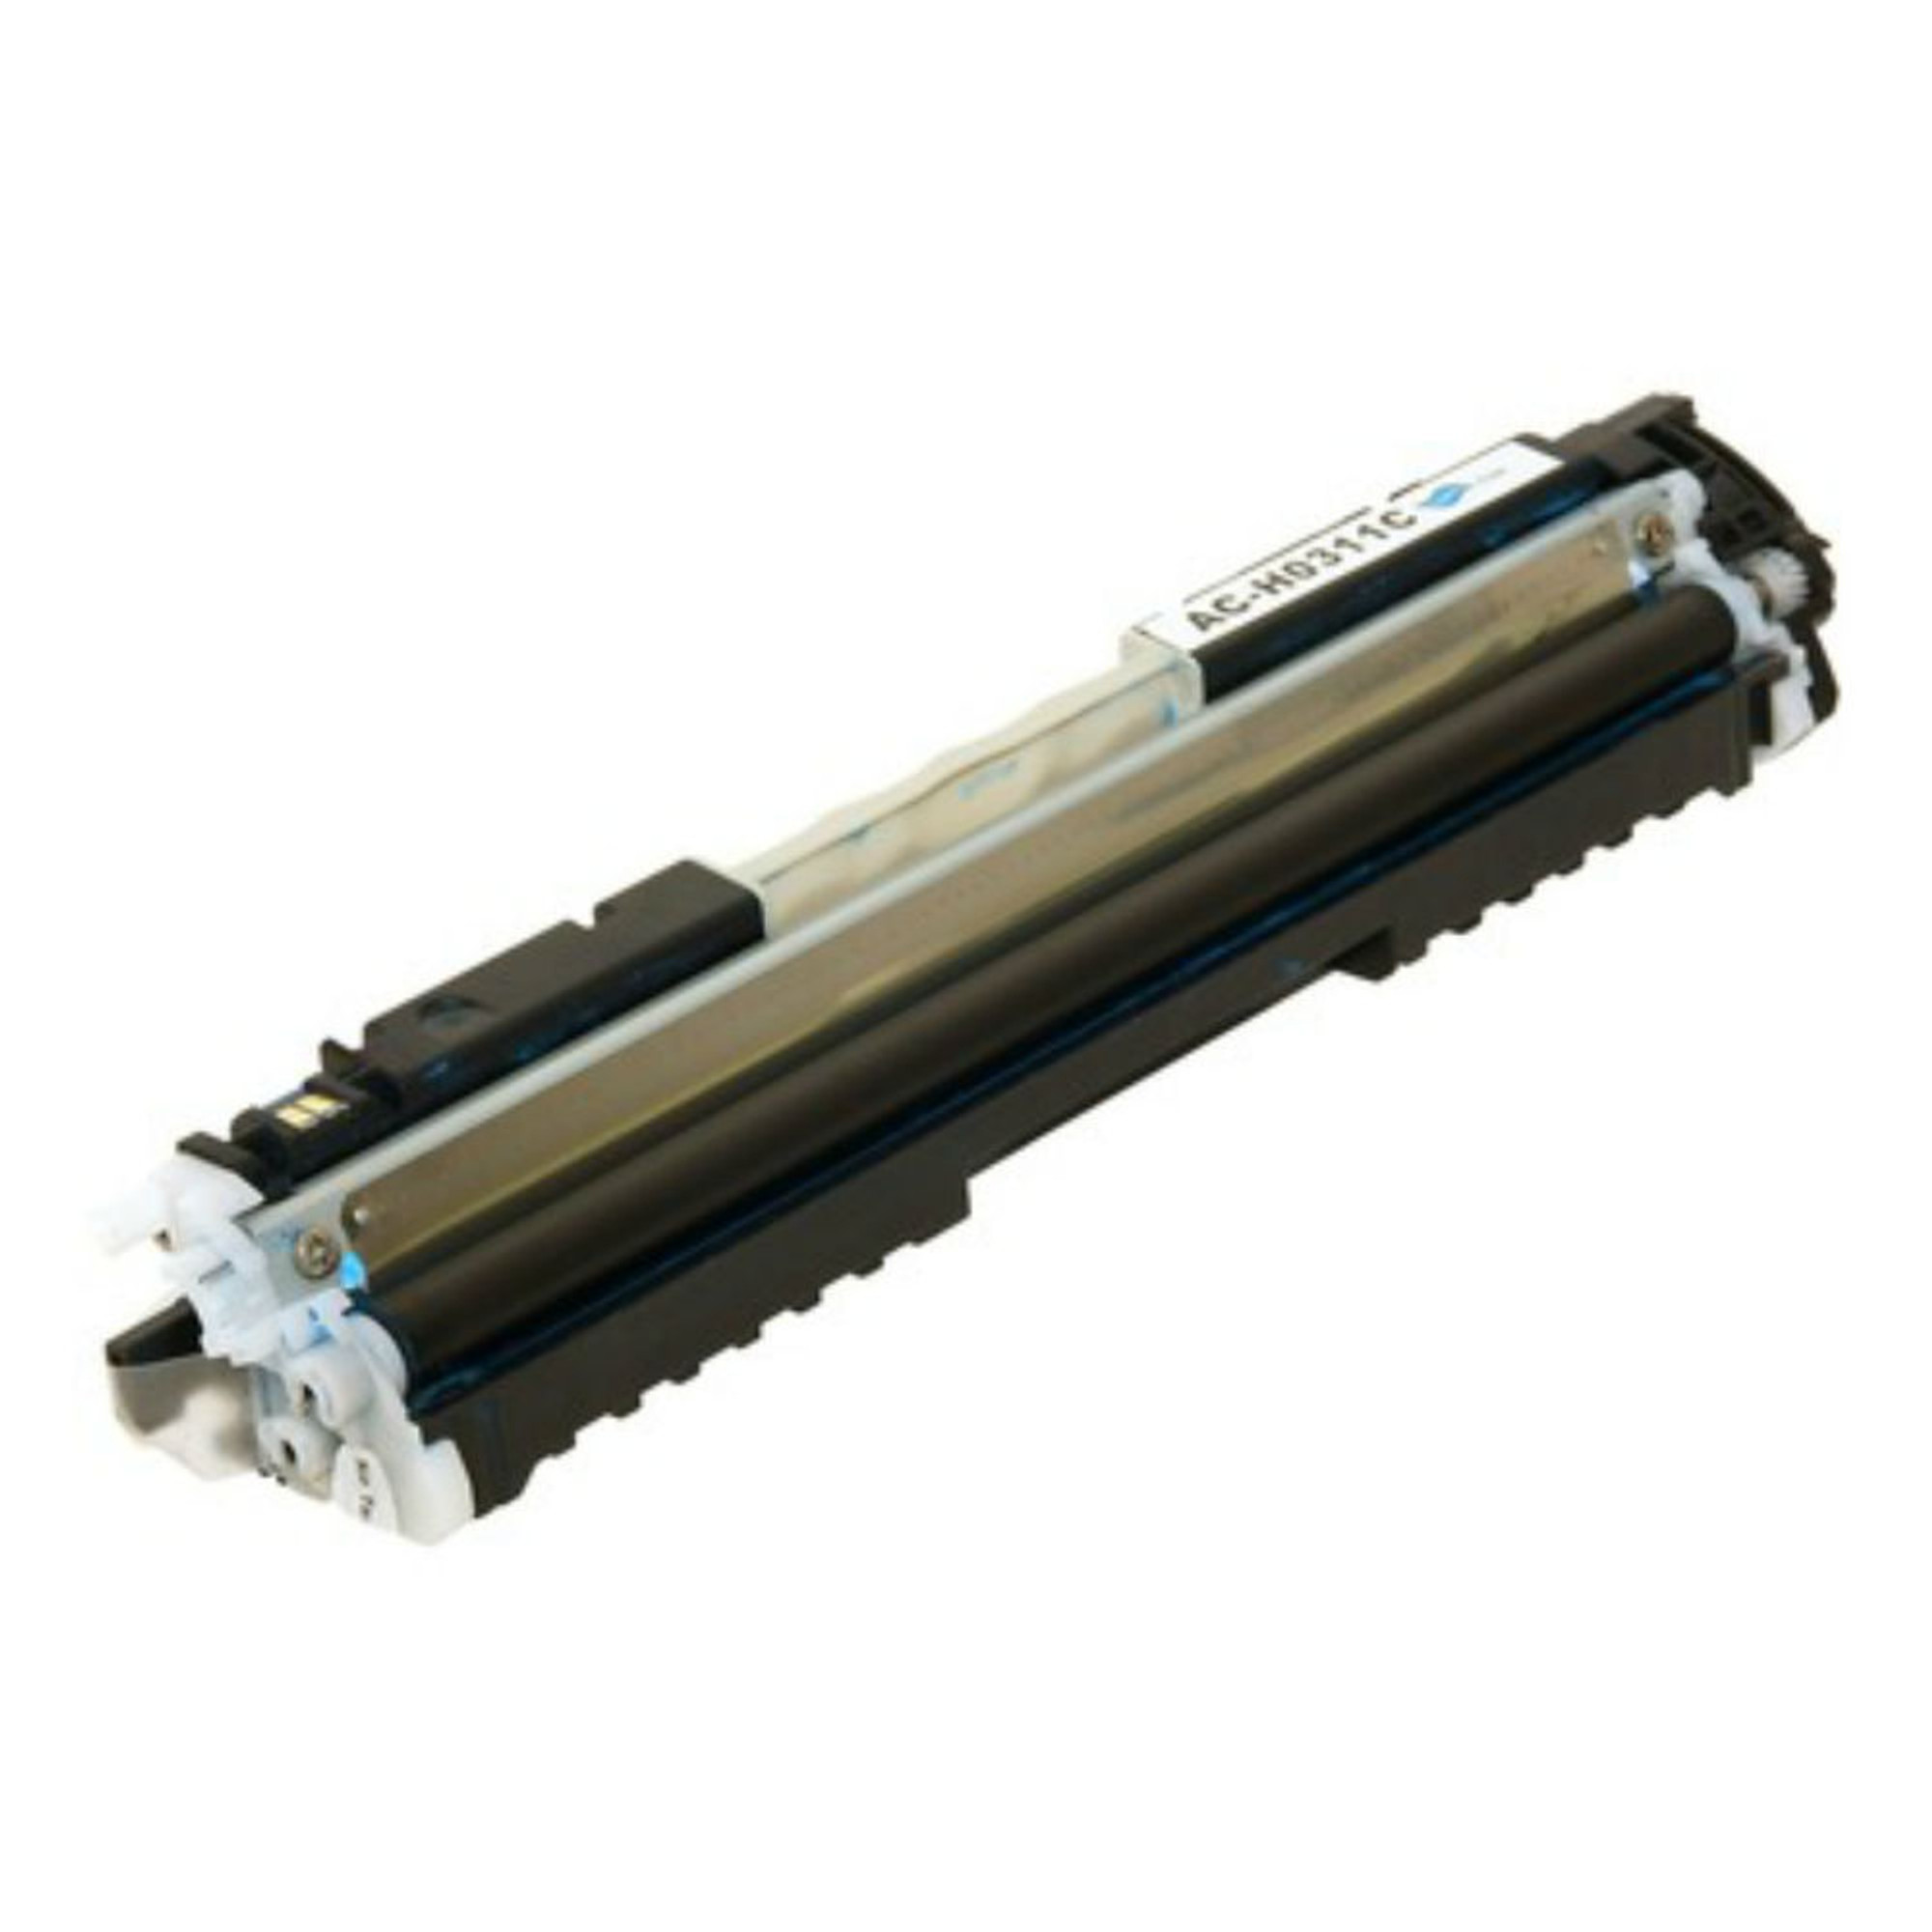 Black Toner for HP LaserJet CP1025nw, M175nw, Printer